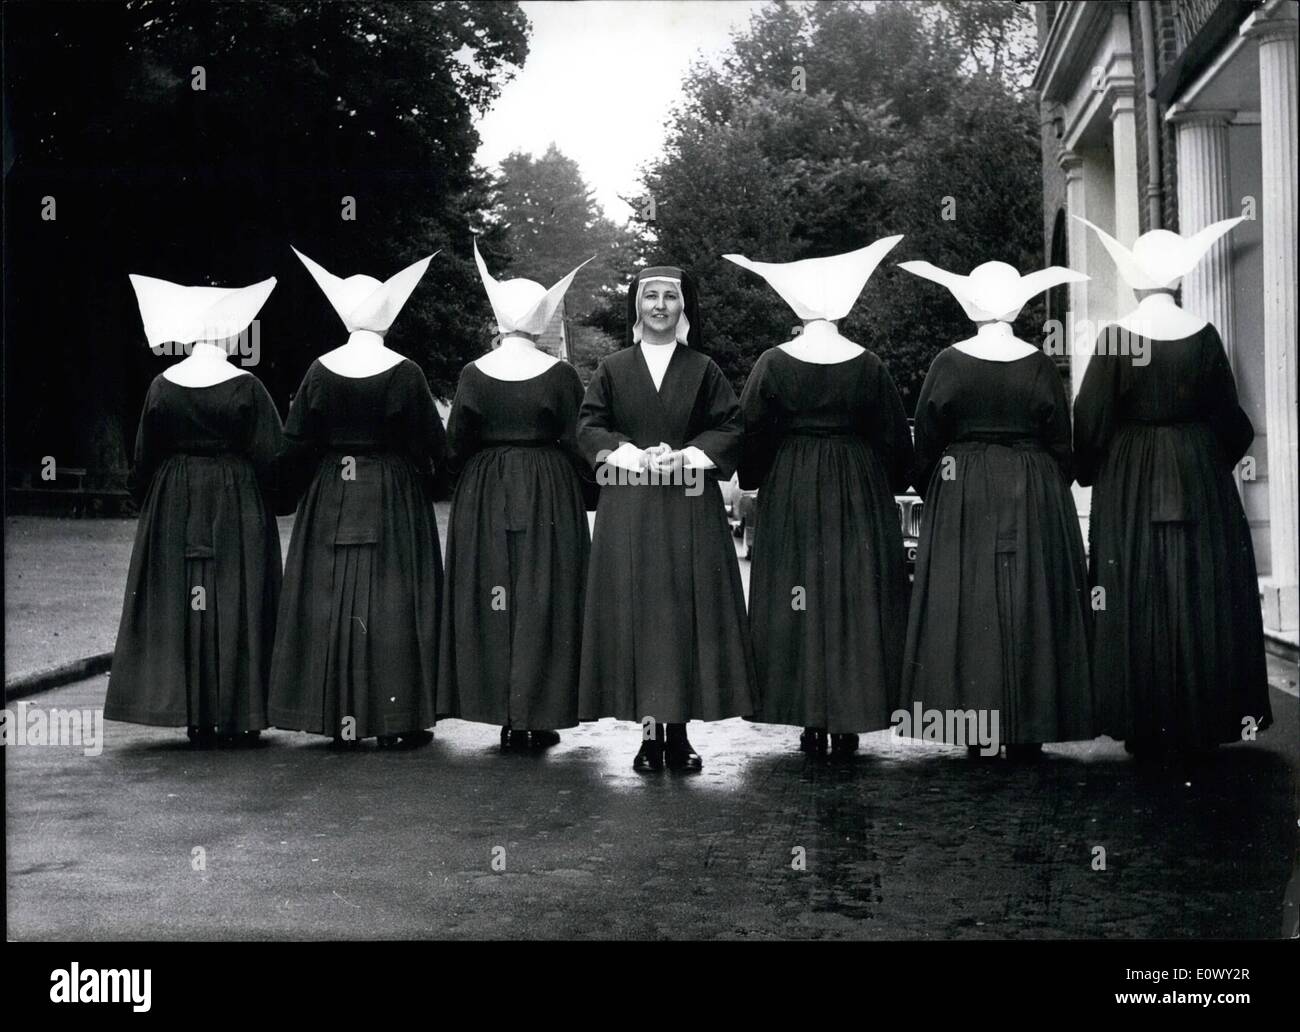 Benedictine Nuns Habits